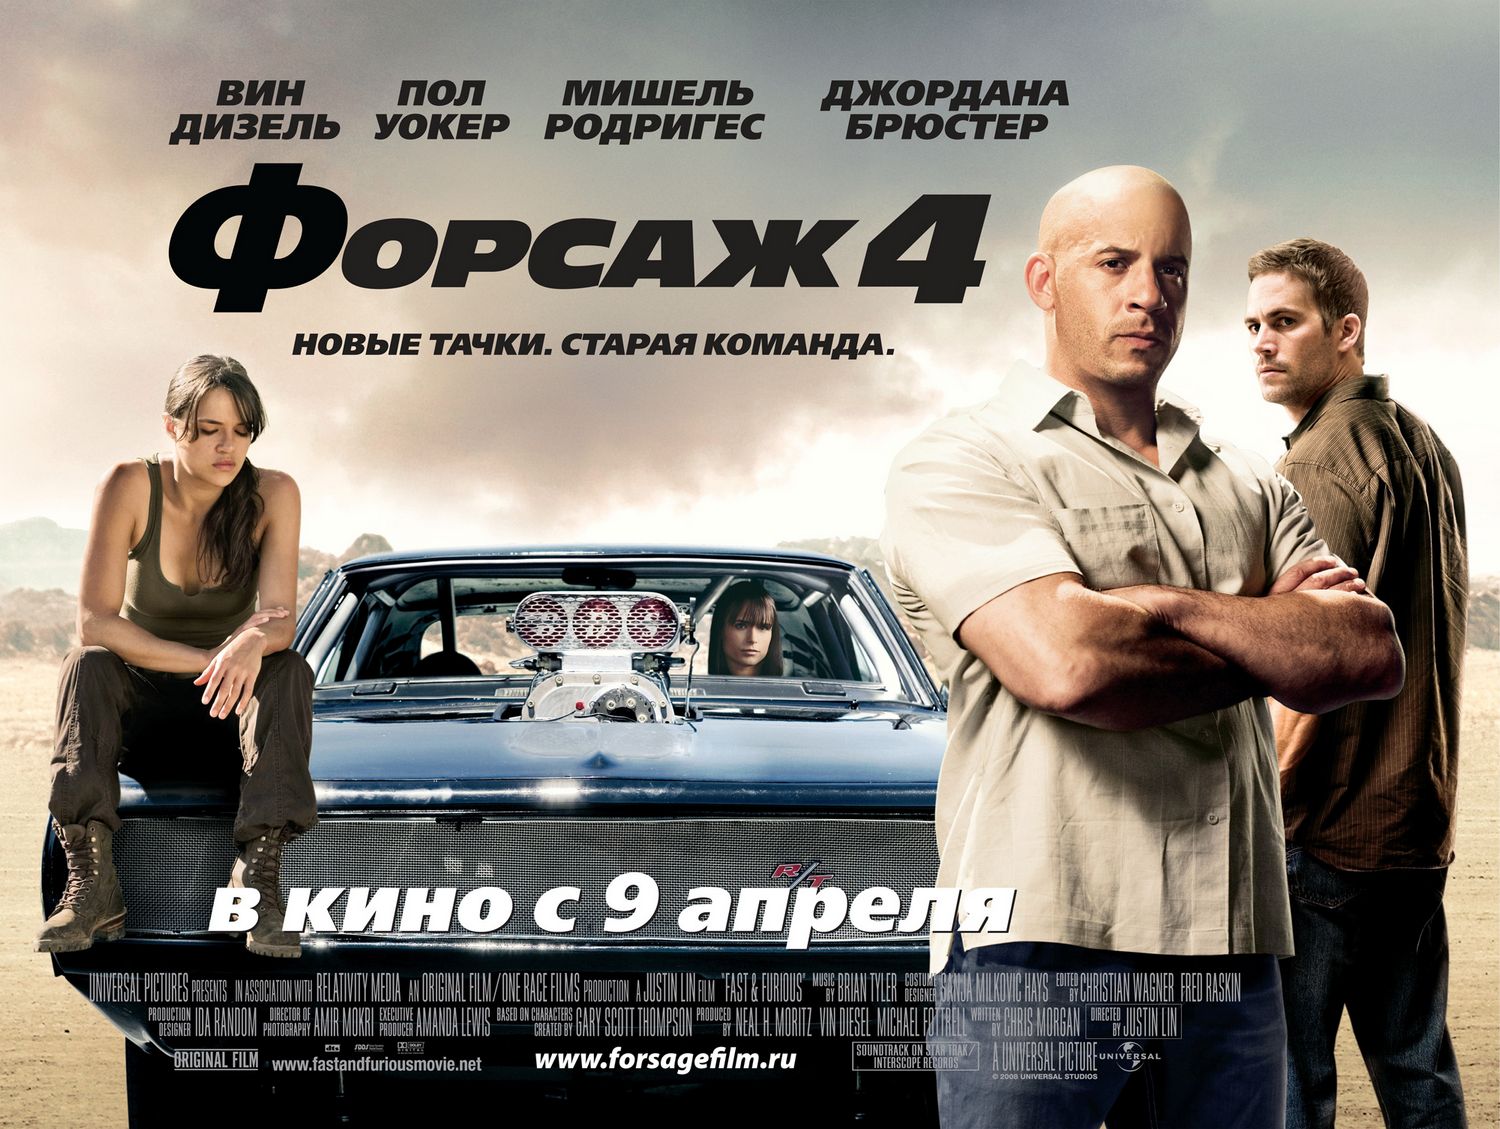 Вин пол. Форсаж 4 (2009) fast & Furious. Форсаж 4 фильм 2009 Постер. (Fast & Furious) [2009] Постер. Форсаж 4 2009 Постер.